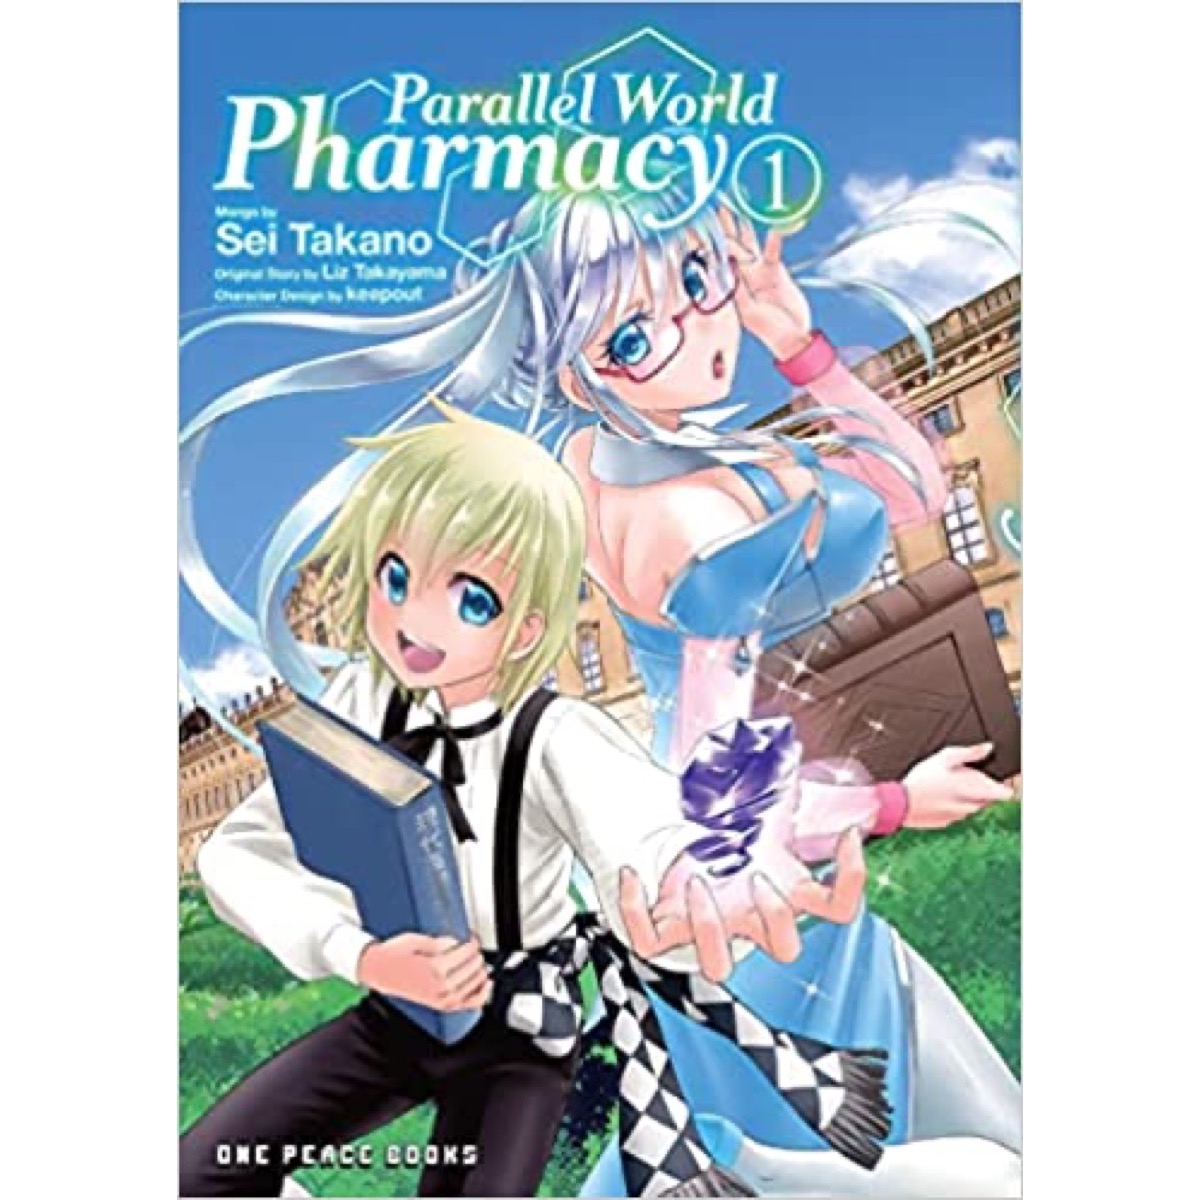 Anime Like Parallel World Pharmacy